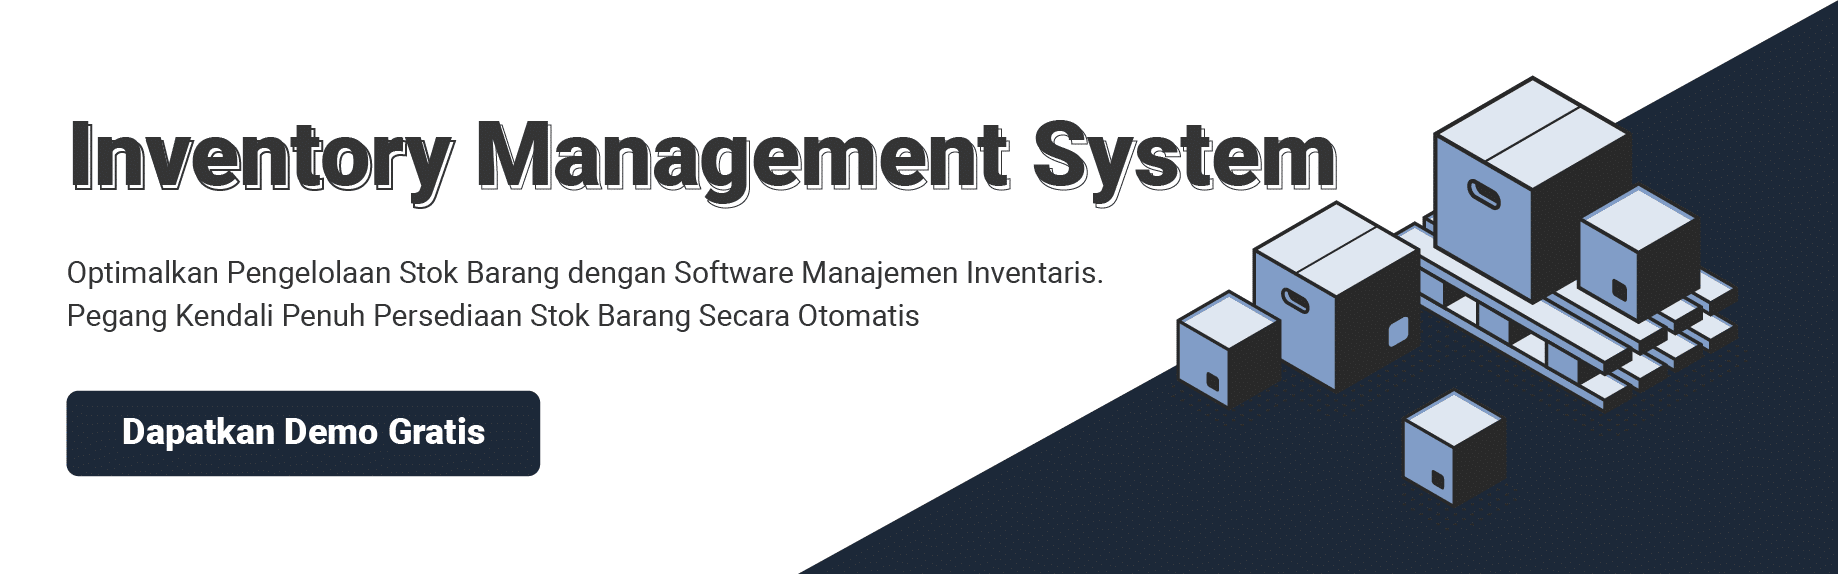 sistem manajemen inventory (https://id.lisam.com/id/exess-eh-s/manajemen-inventaris/)